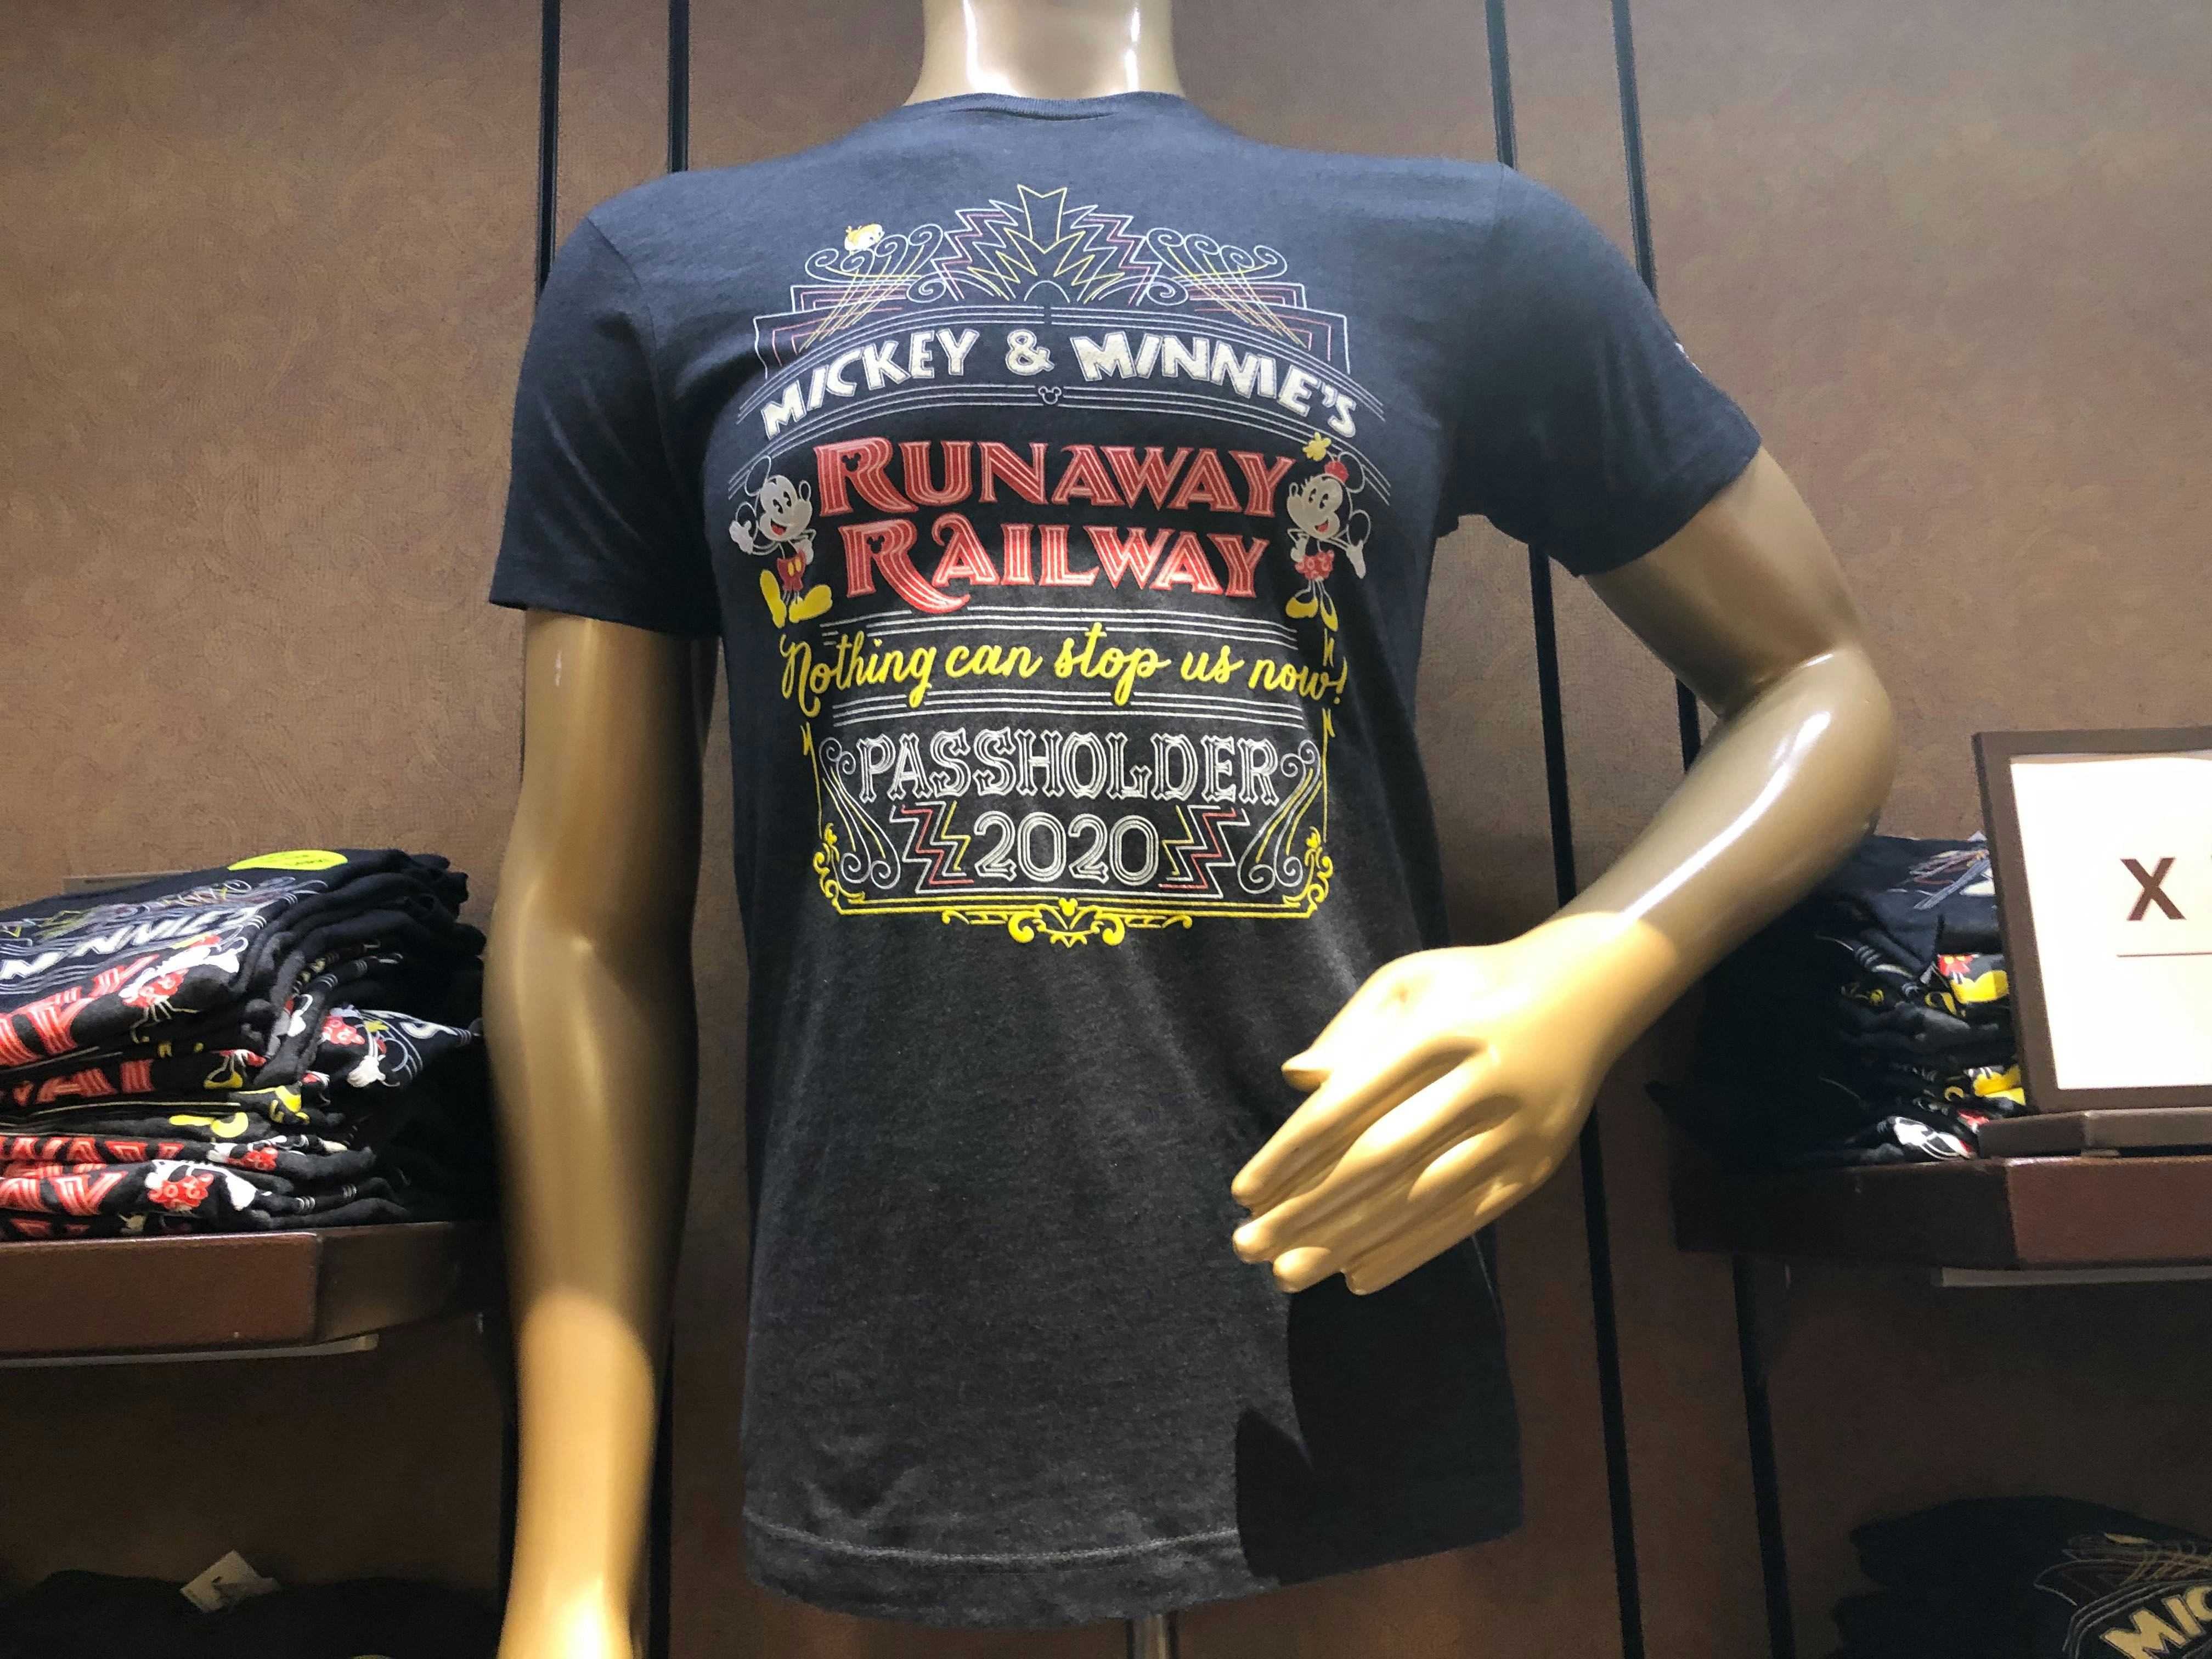 Mickey Minnies Runaway Railway more merch 22.jpg?auto=compress%2Cformat&ixlib=php 1.2